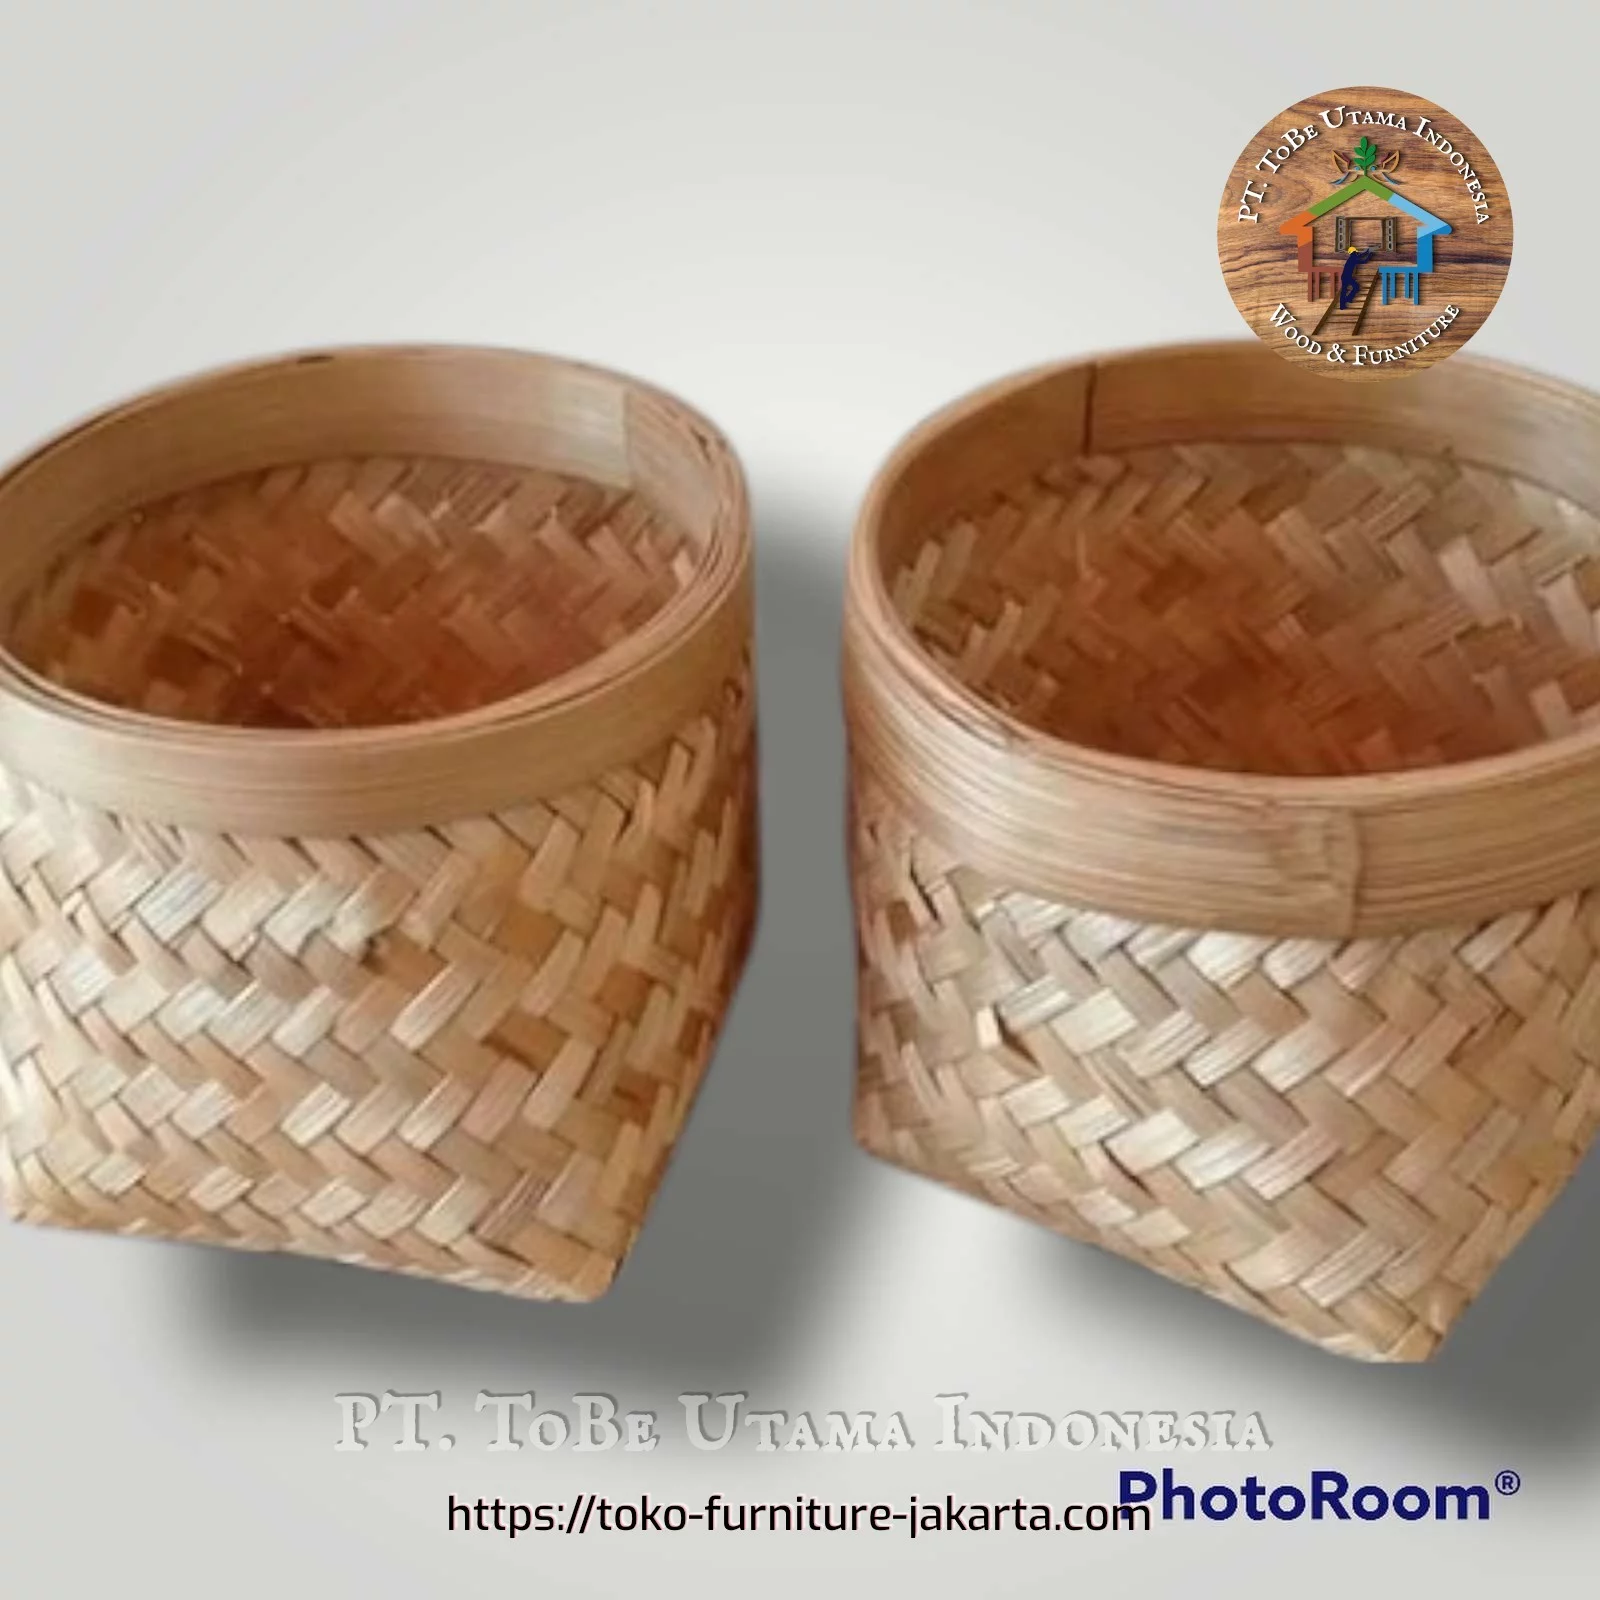 Kitchenware: Bakul made of bamboo wood (image 1 of 1).